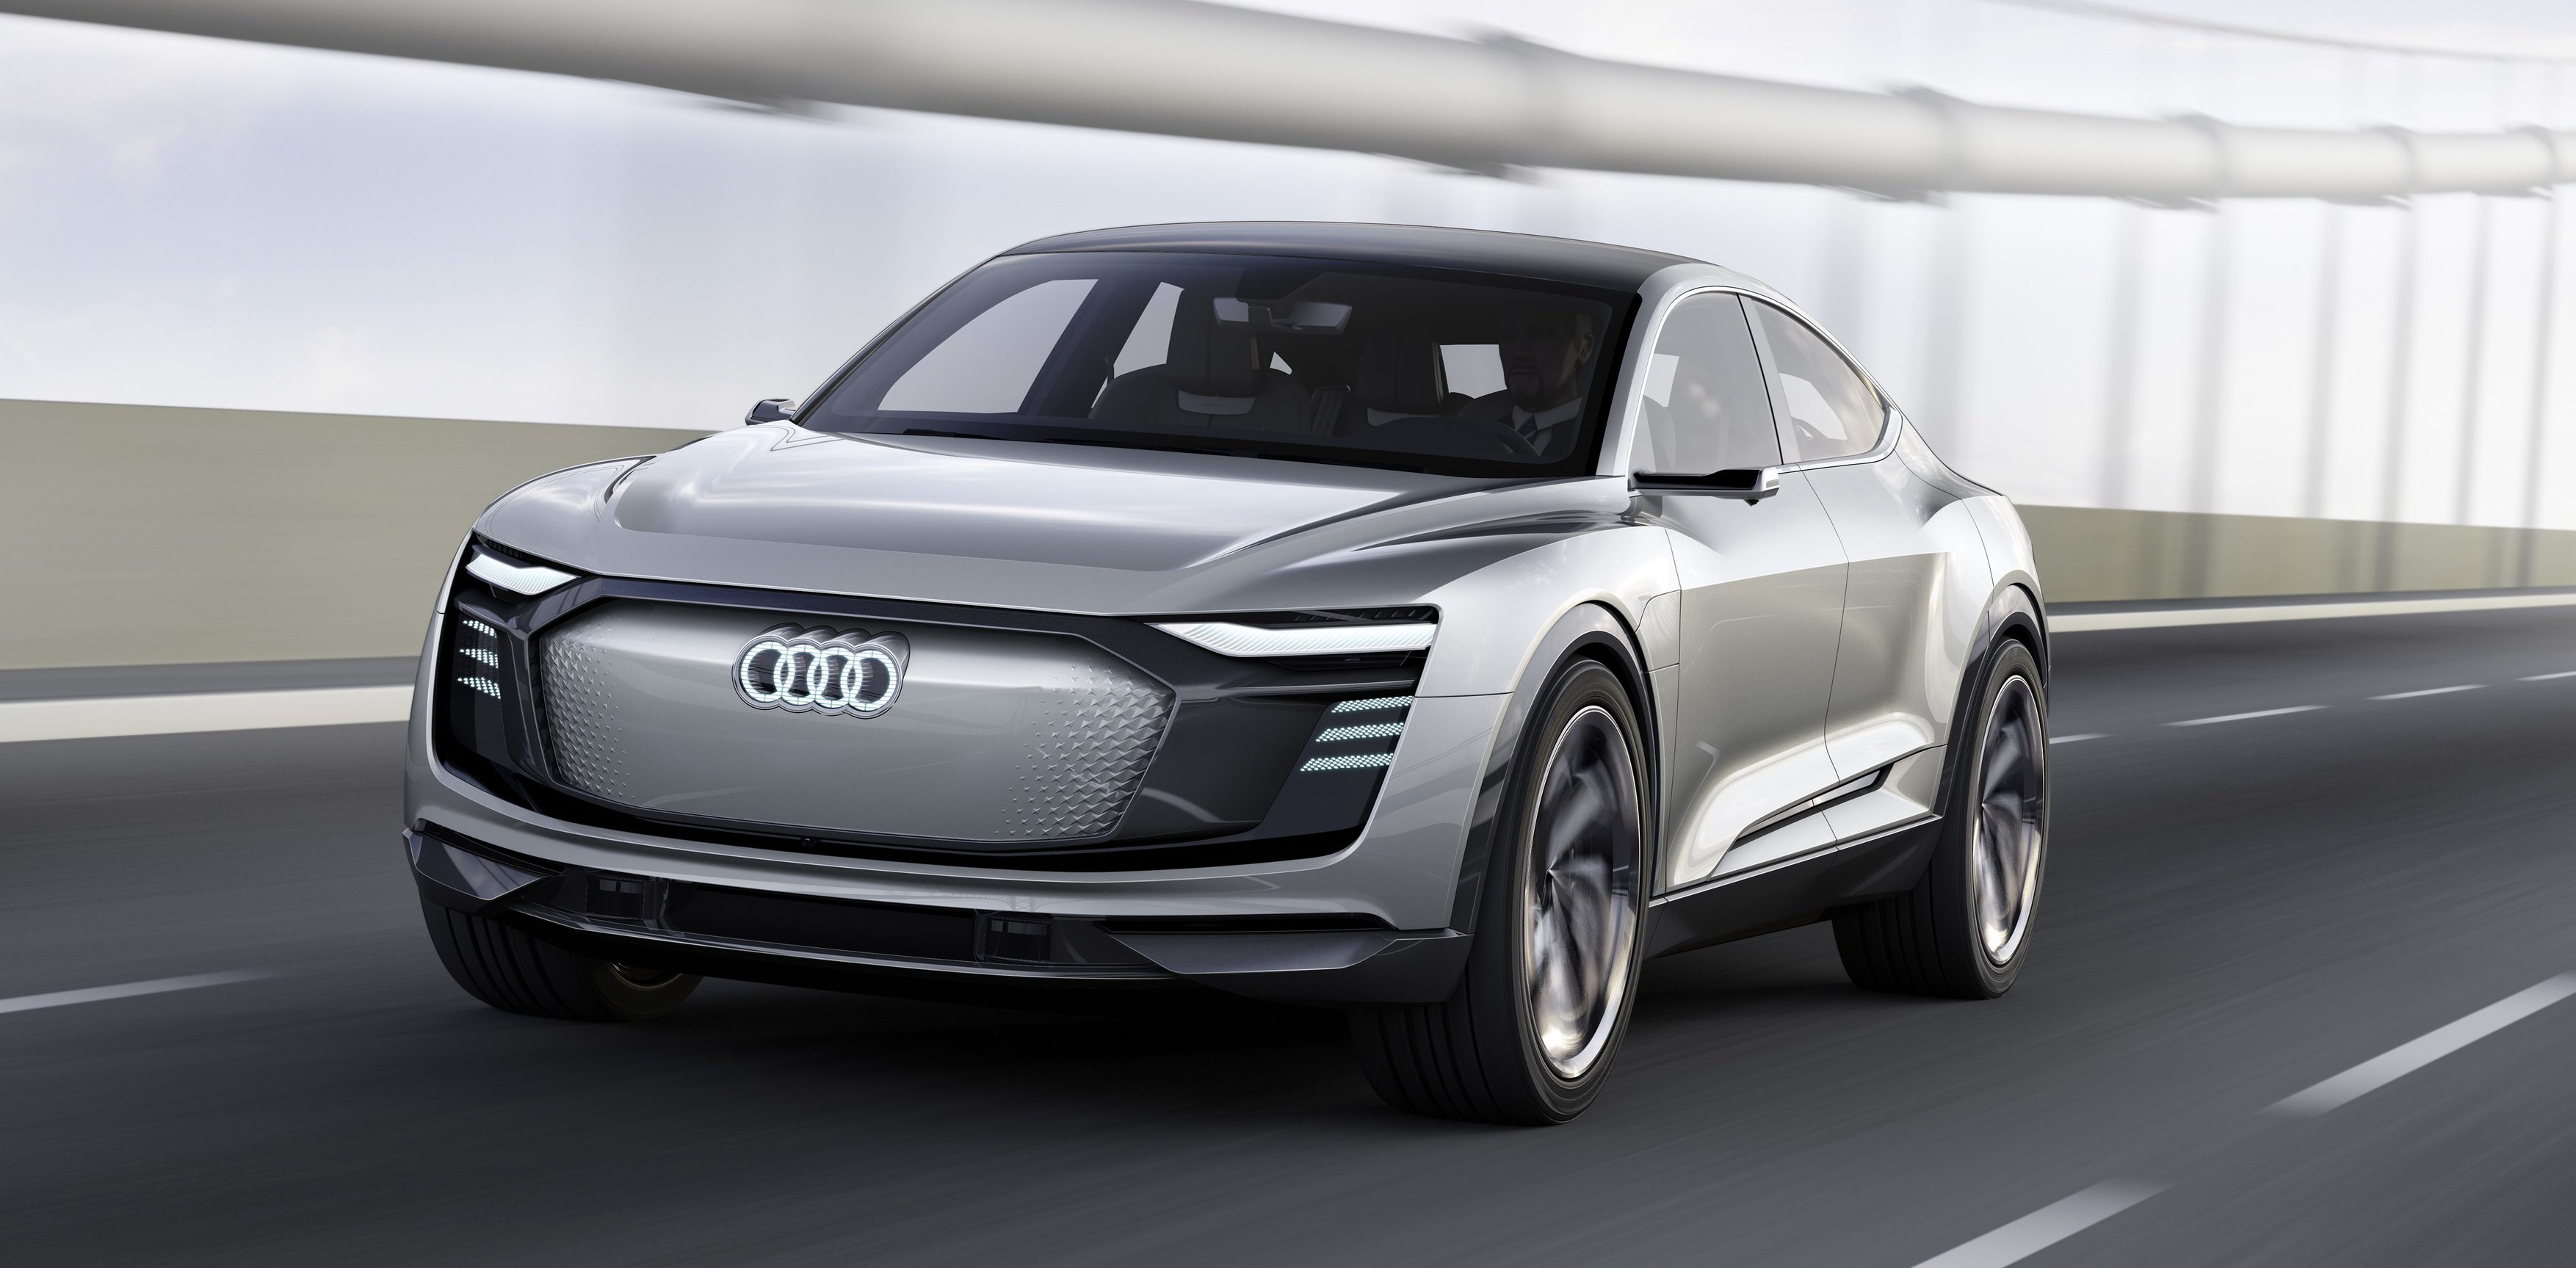 Audi unveils new etron Sportback with 300 miles of range, production